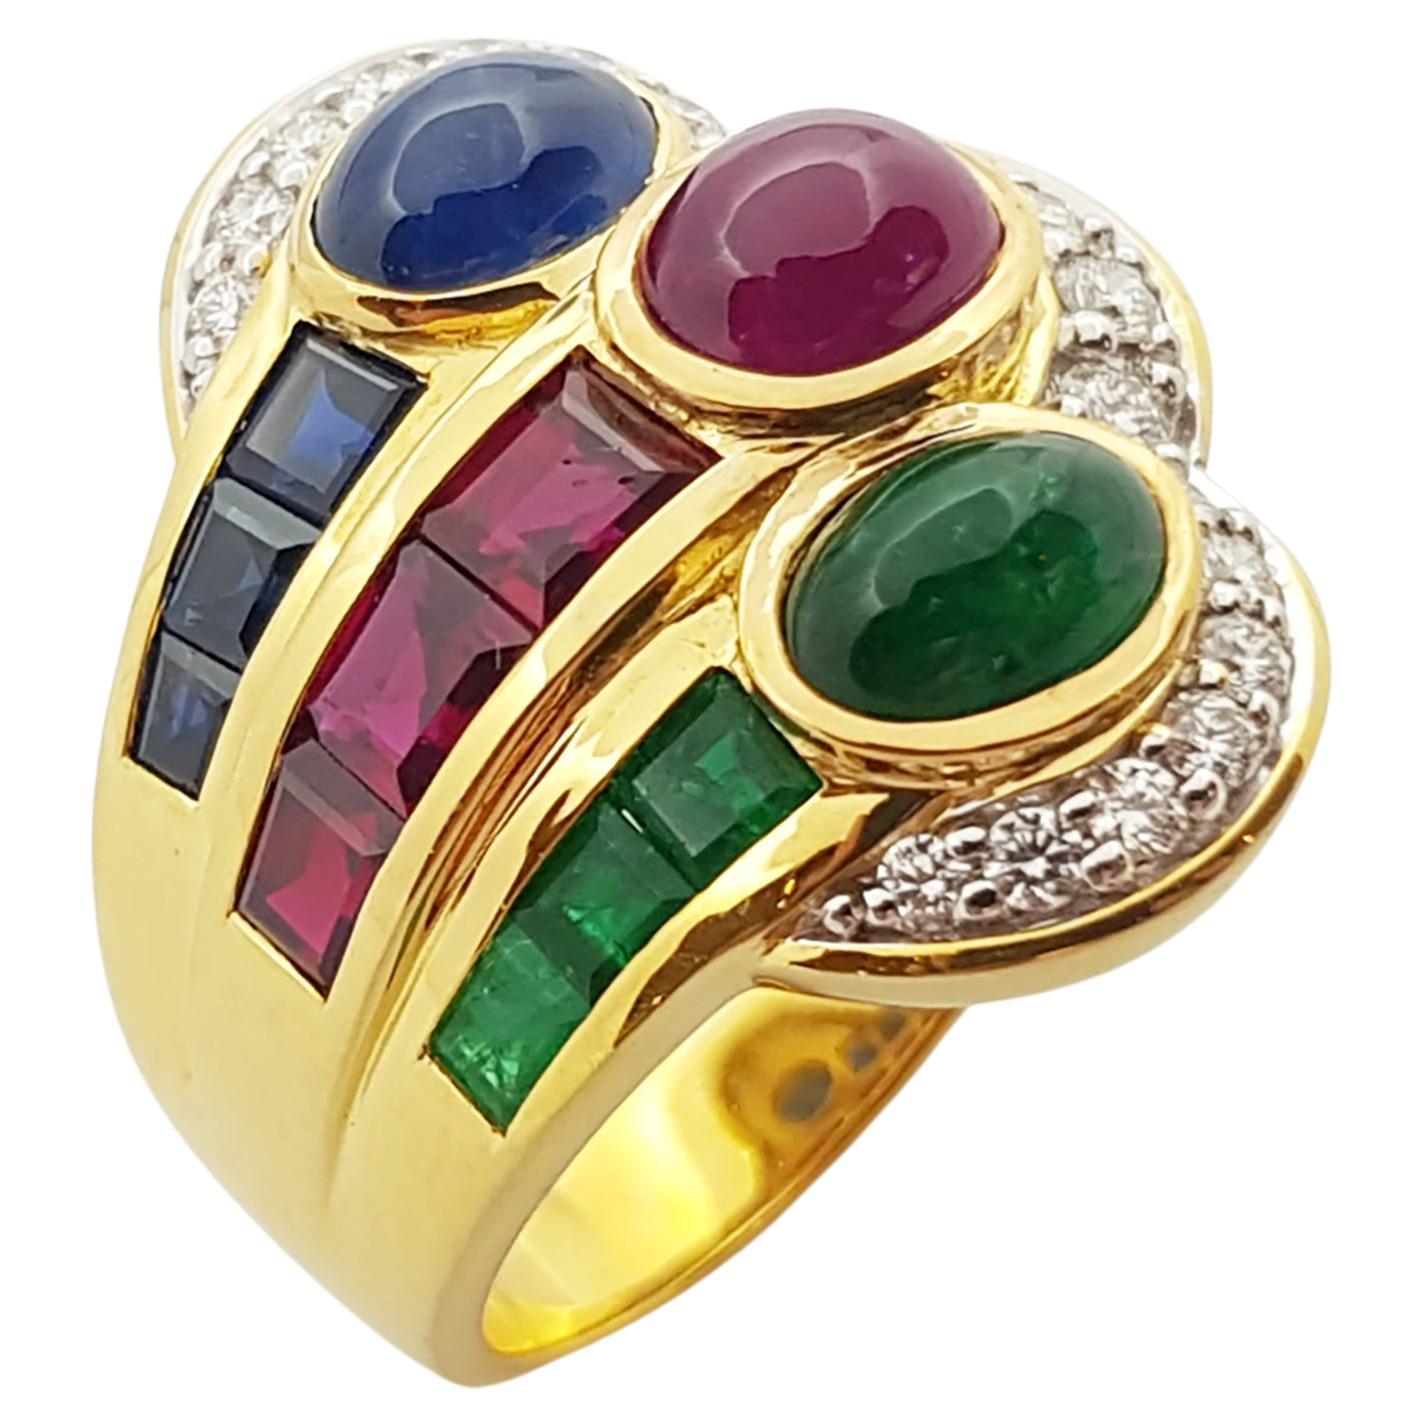 Ruby, Emerald, Blue Sapphire and Diamond Ring Set in 18 Karat Gold Settings